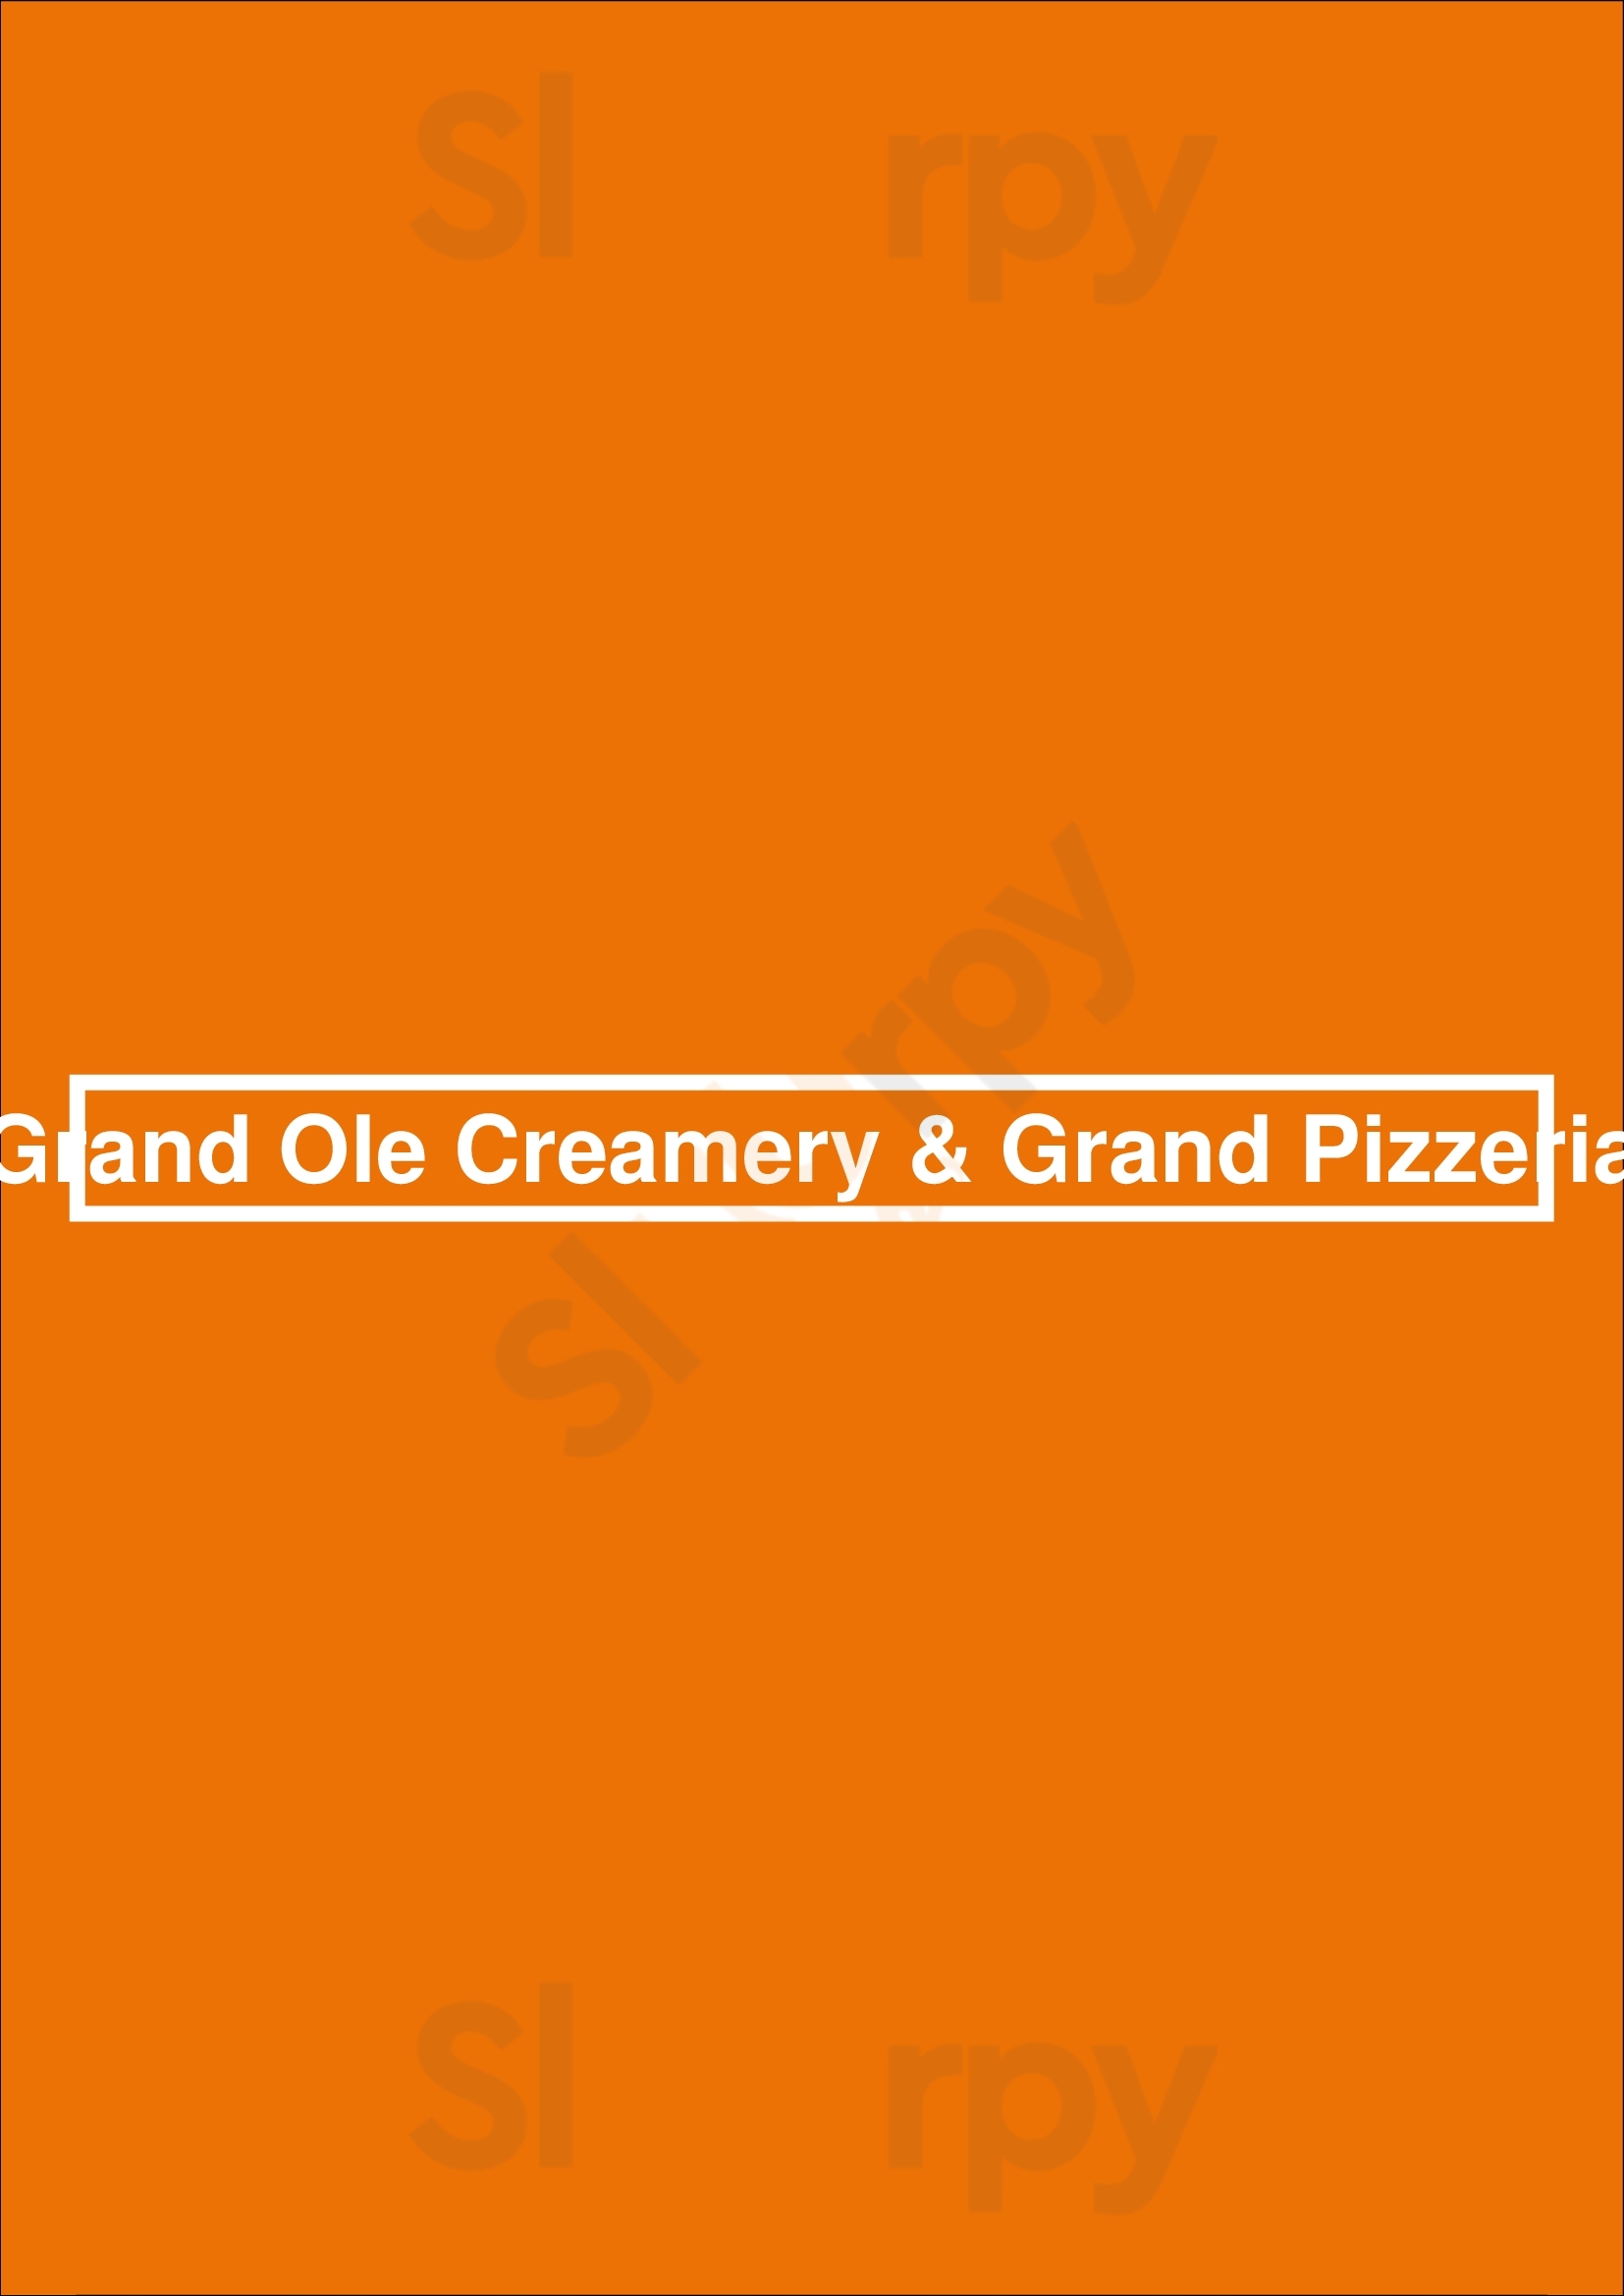 Grand Ole Creamery Saint Paul Menu - 1